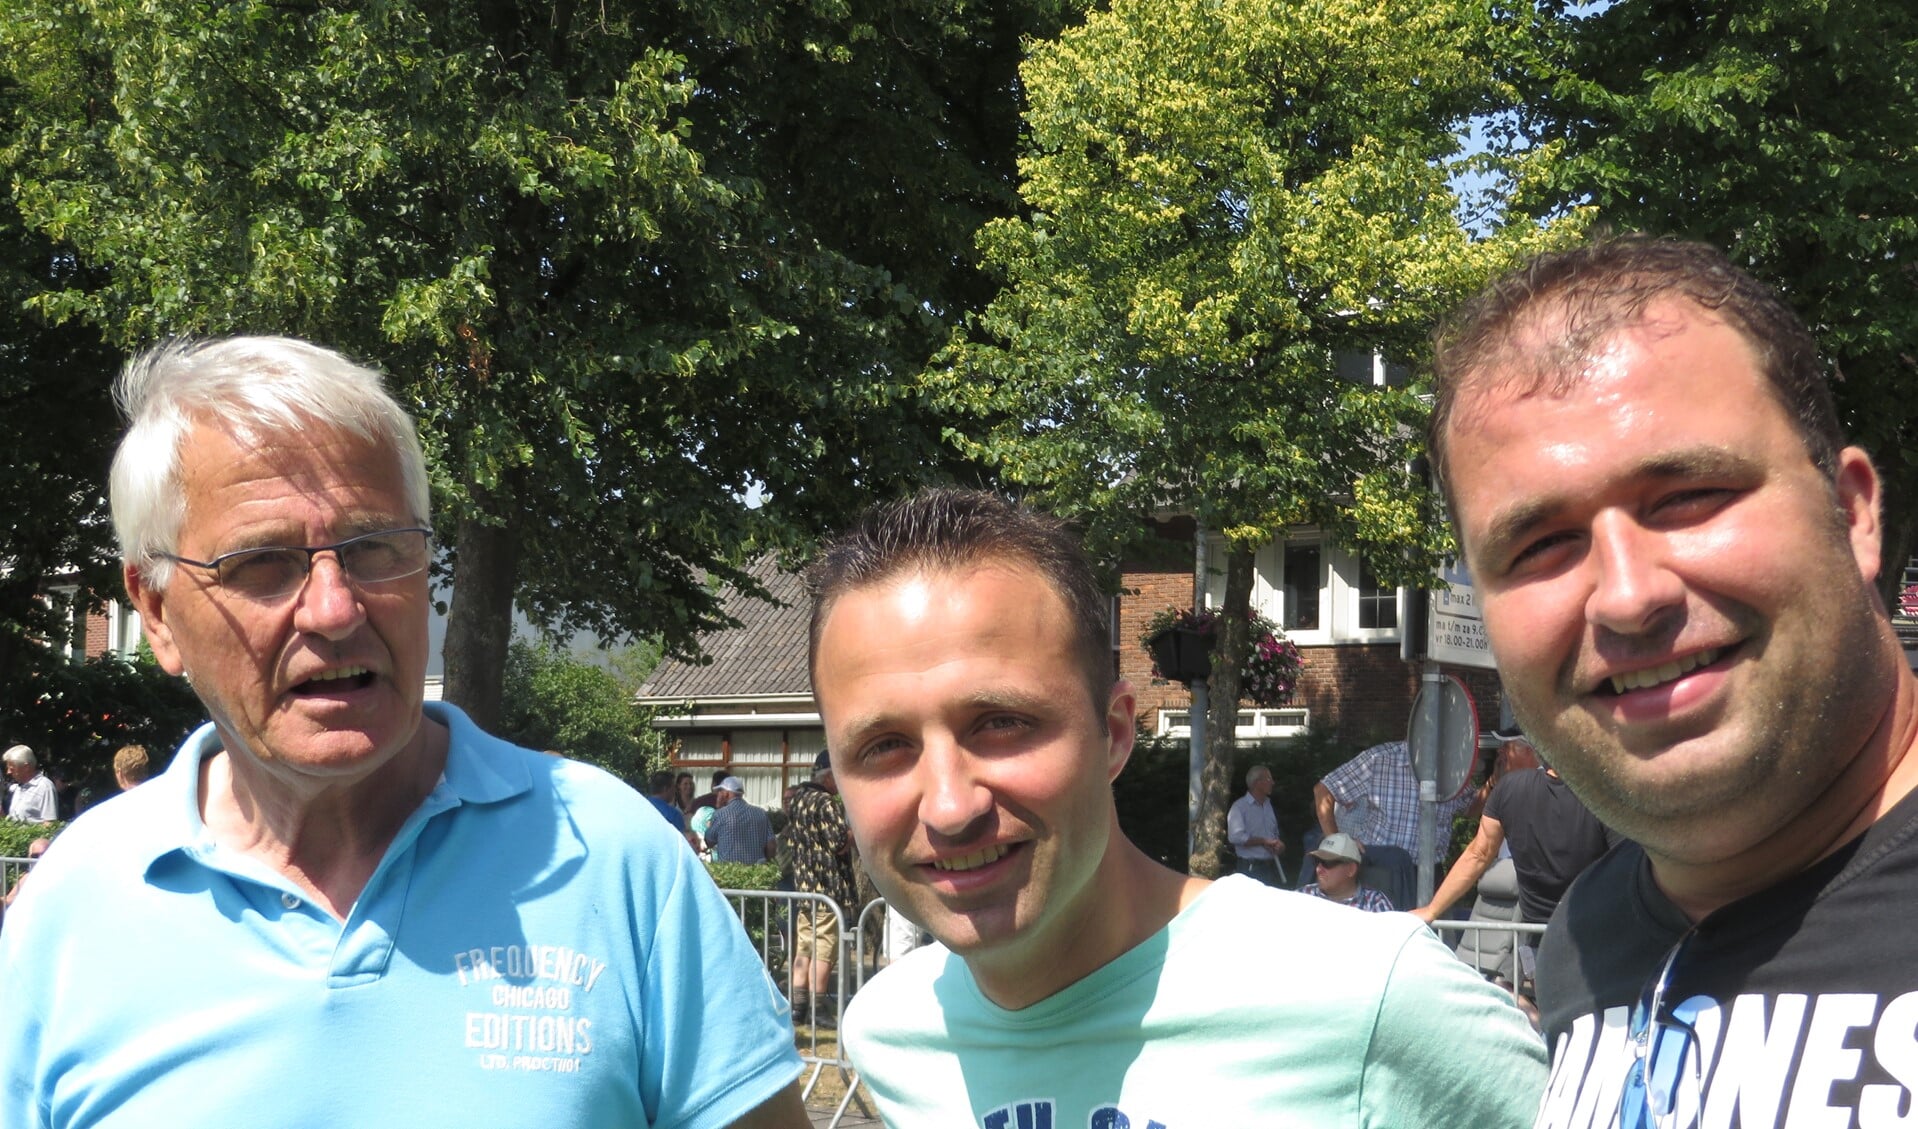 De mannen van Kortebaandraverijen.nl met v.l.n.r. André, Mathieu en Benjamin Hilgersom (foto: Rob Krul).